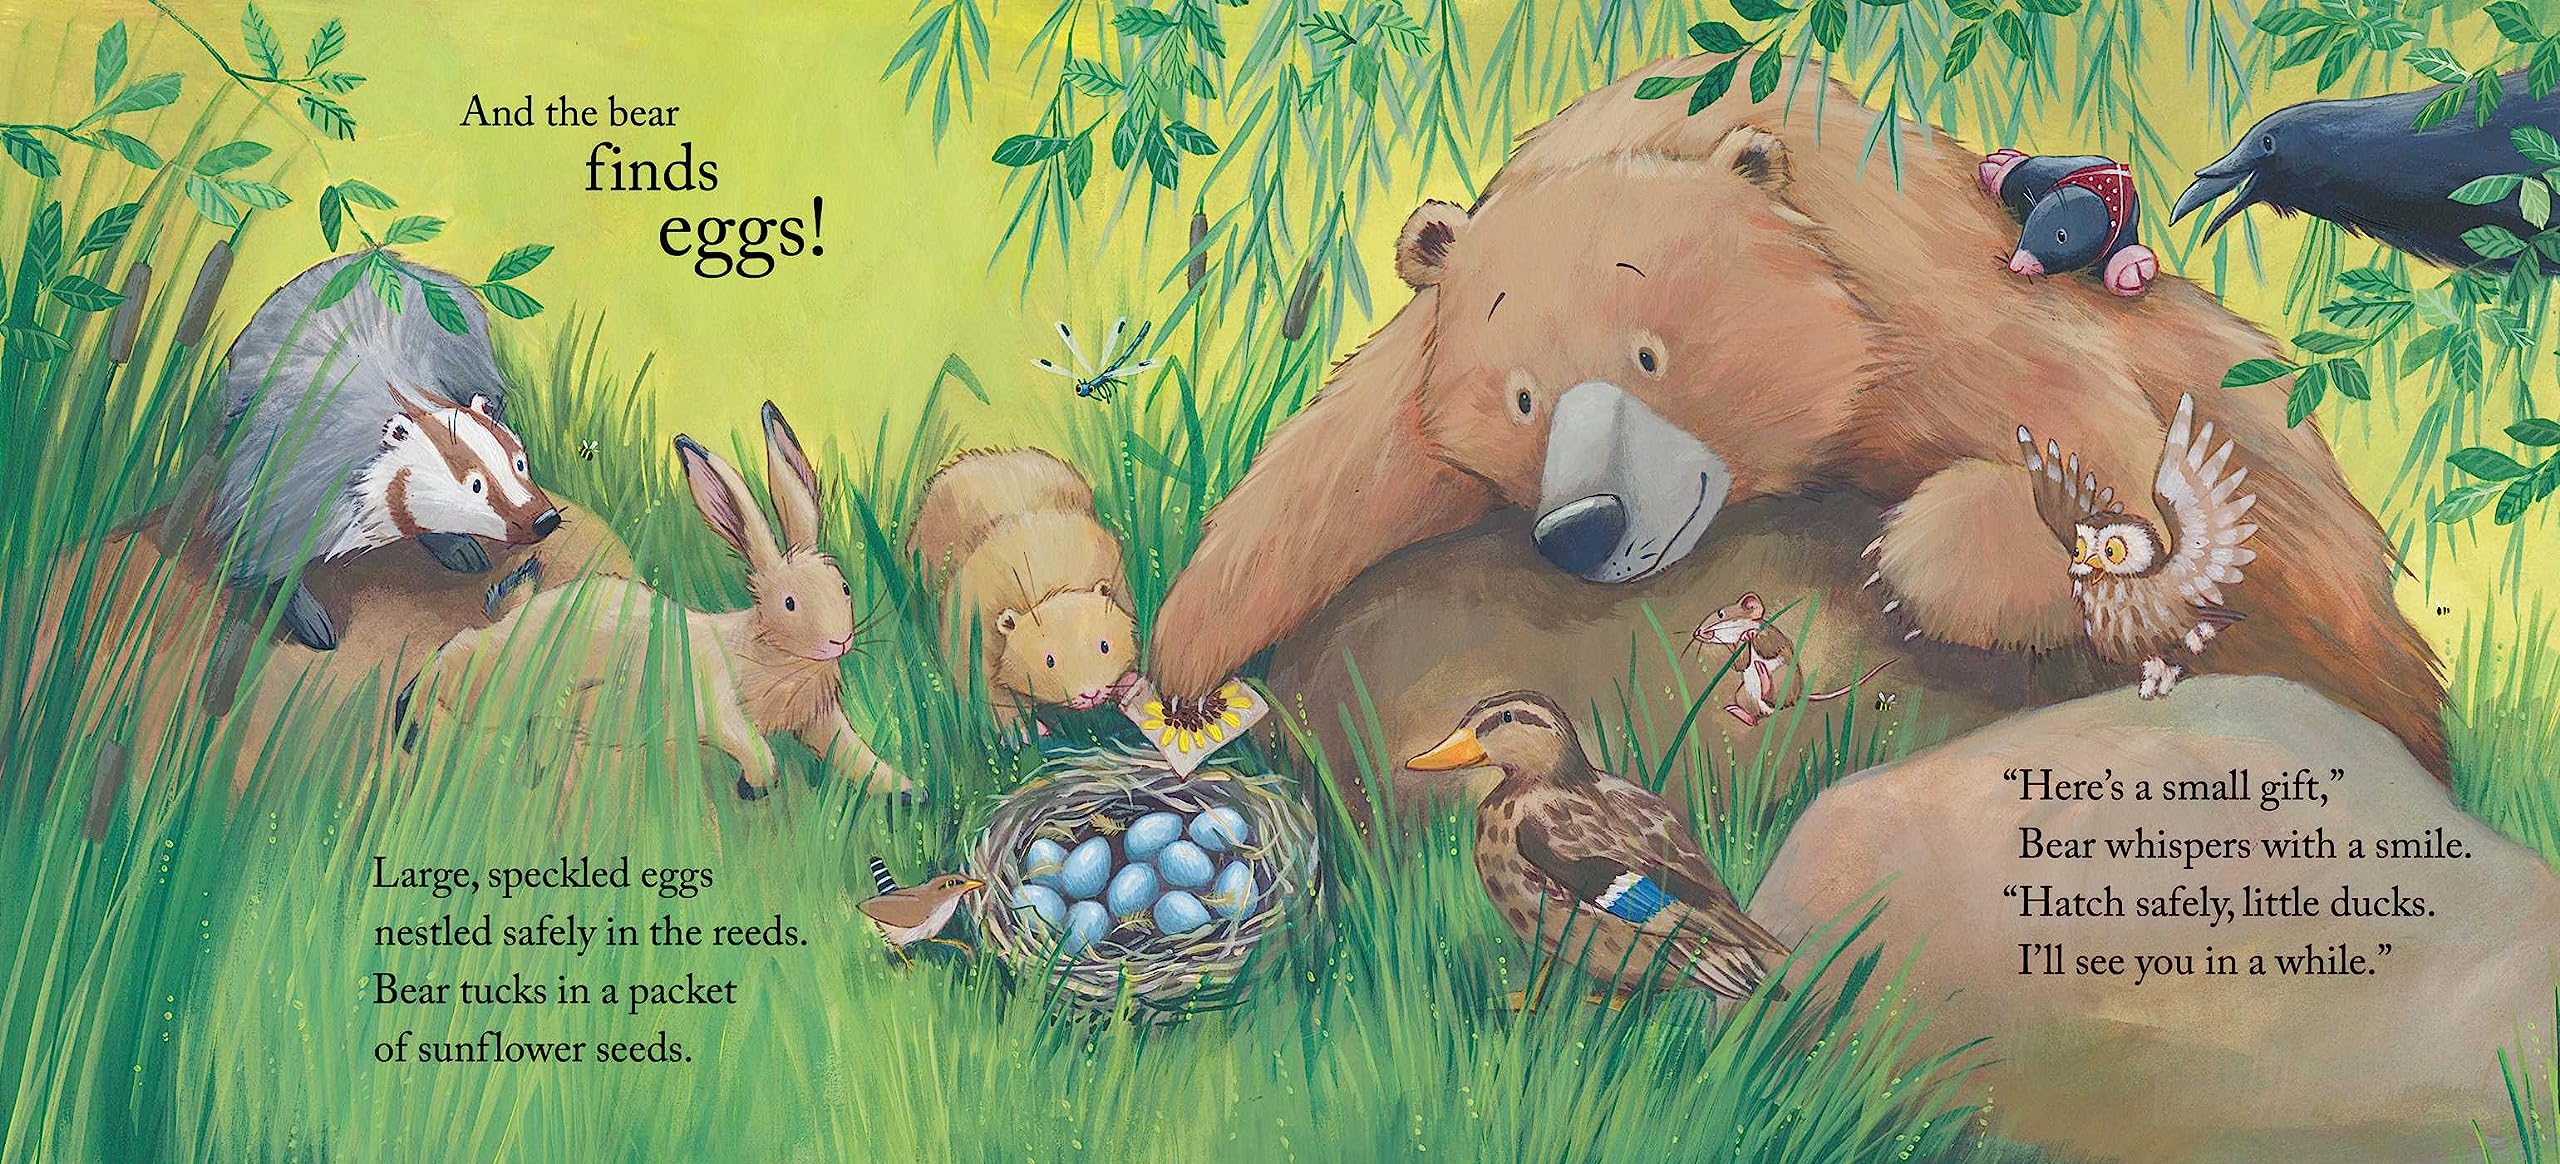 Bear Finds Eggs (The Bear Books)